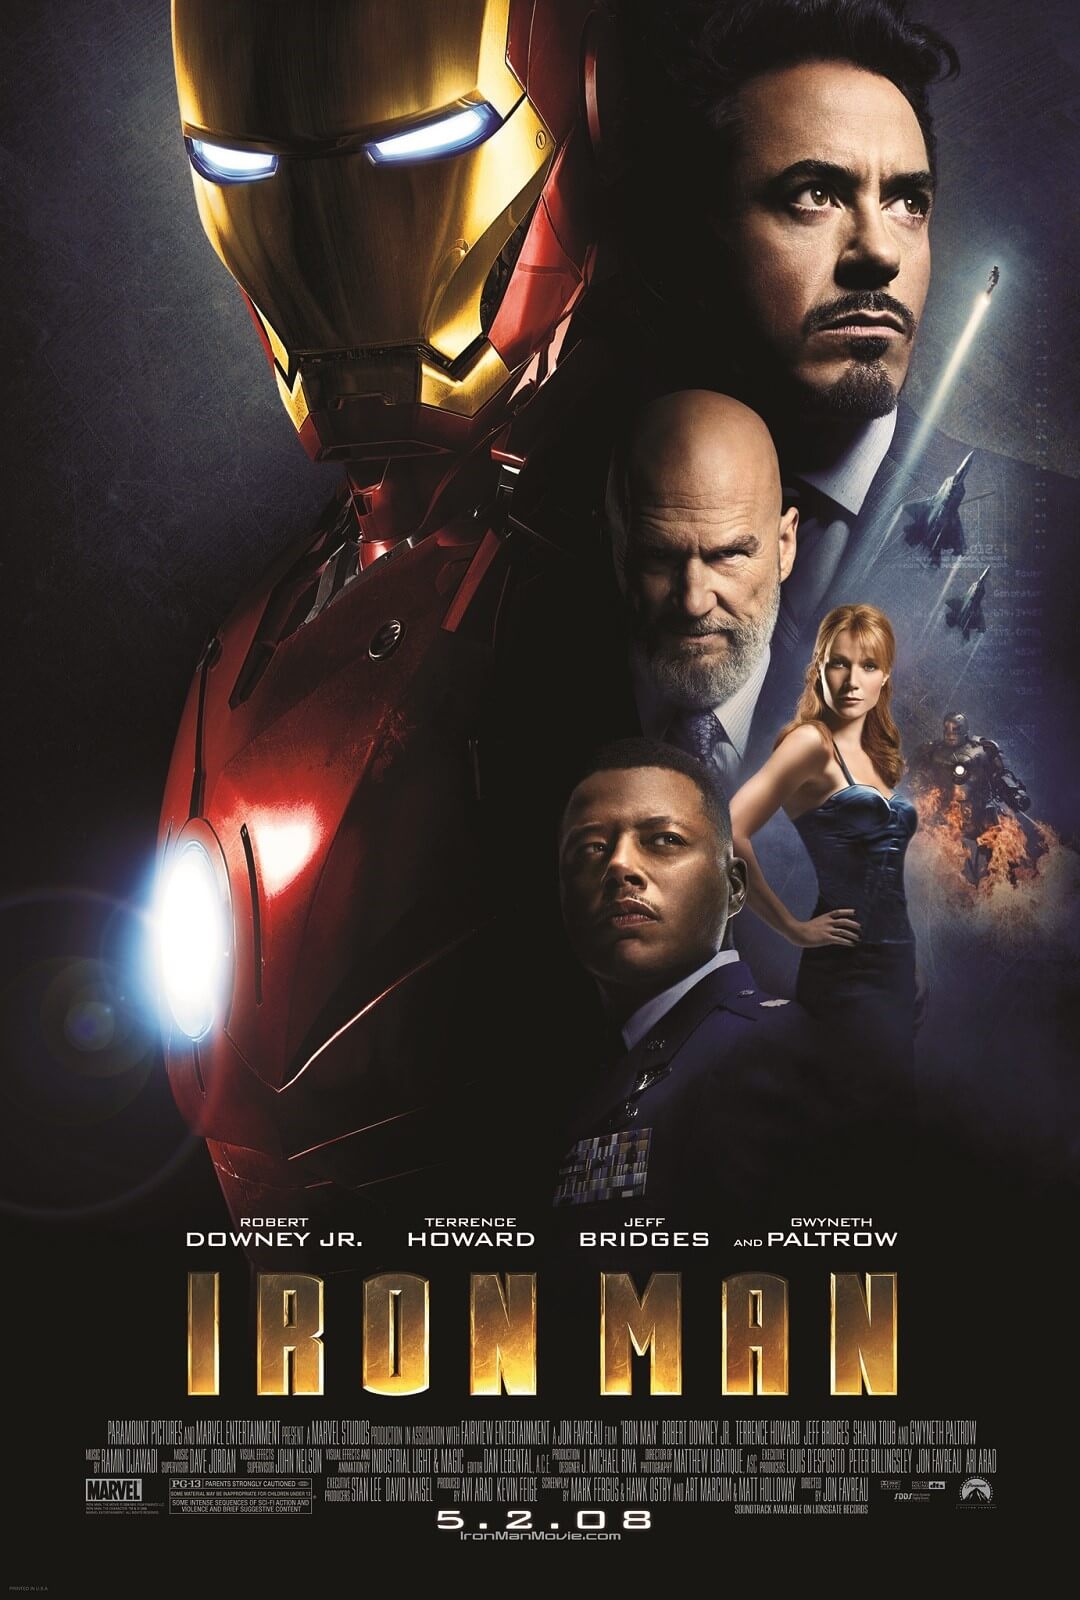 Download Iron Man (2008) (Multi Audio) Movie In 480p [375 MB] | 720p [983 MB] | 1080p [1.7 GB]